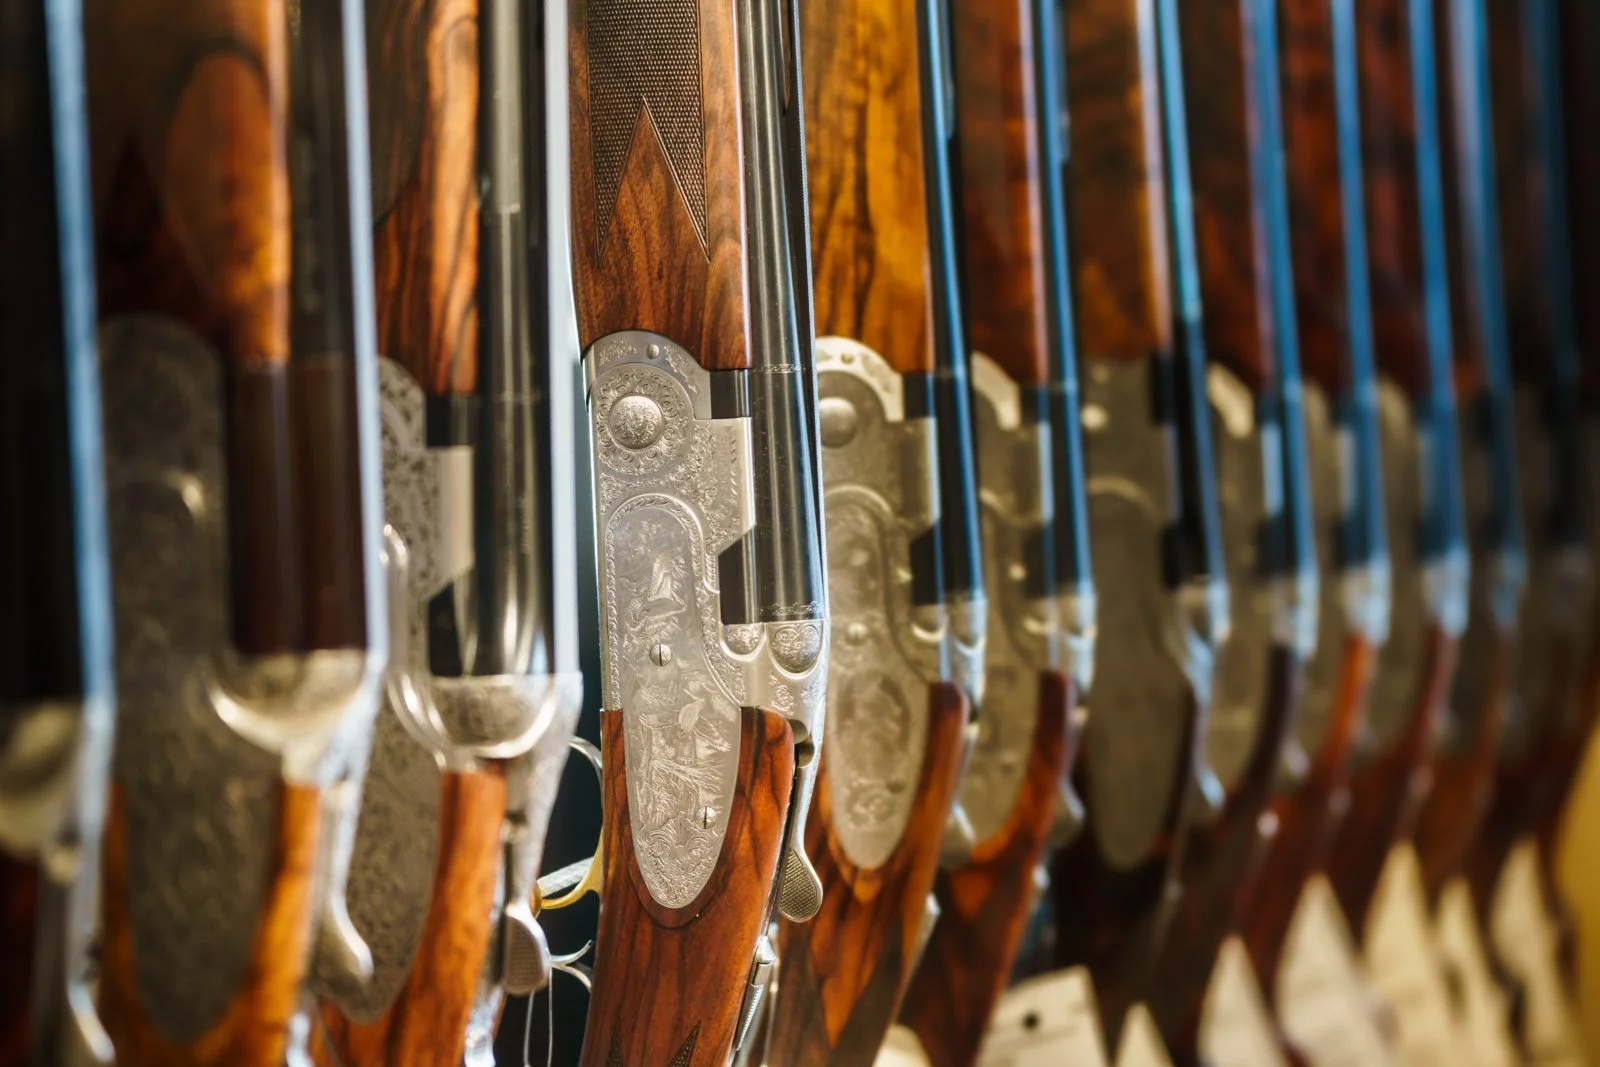 Shotguns lined up in gun cabinet